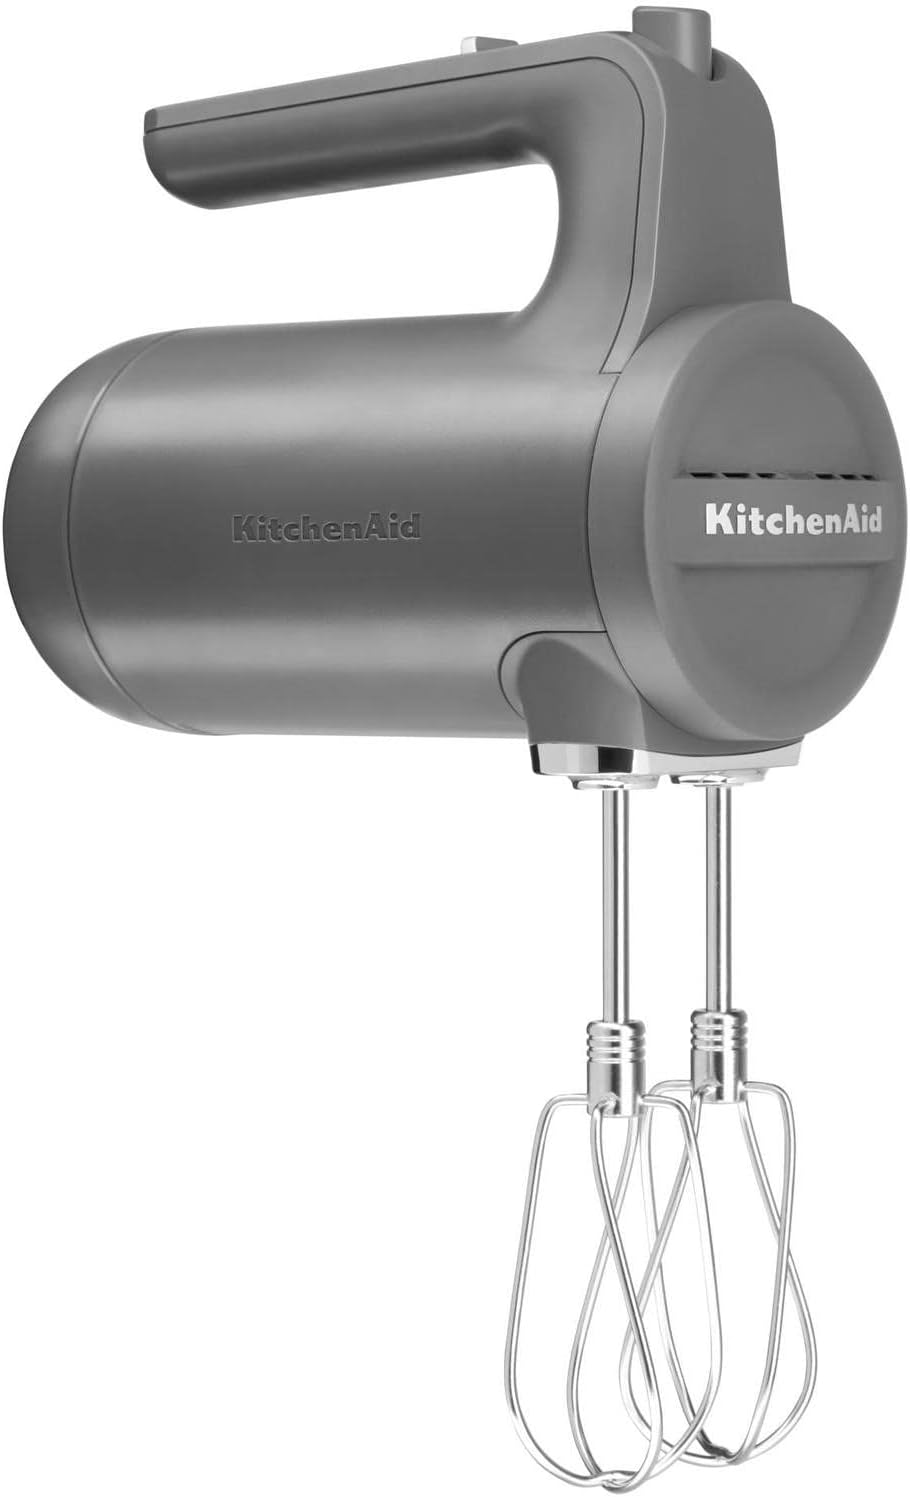 Kitchenaid Battery Hand Mixer with 7 Speeds, Anthracite